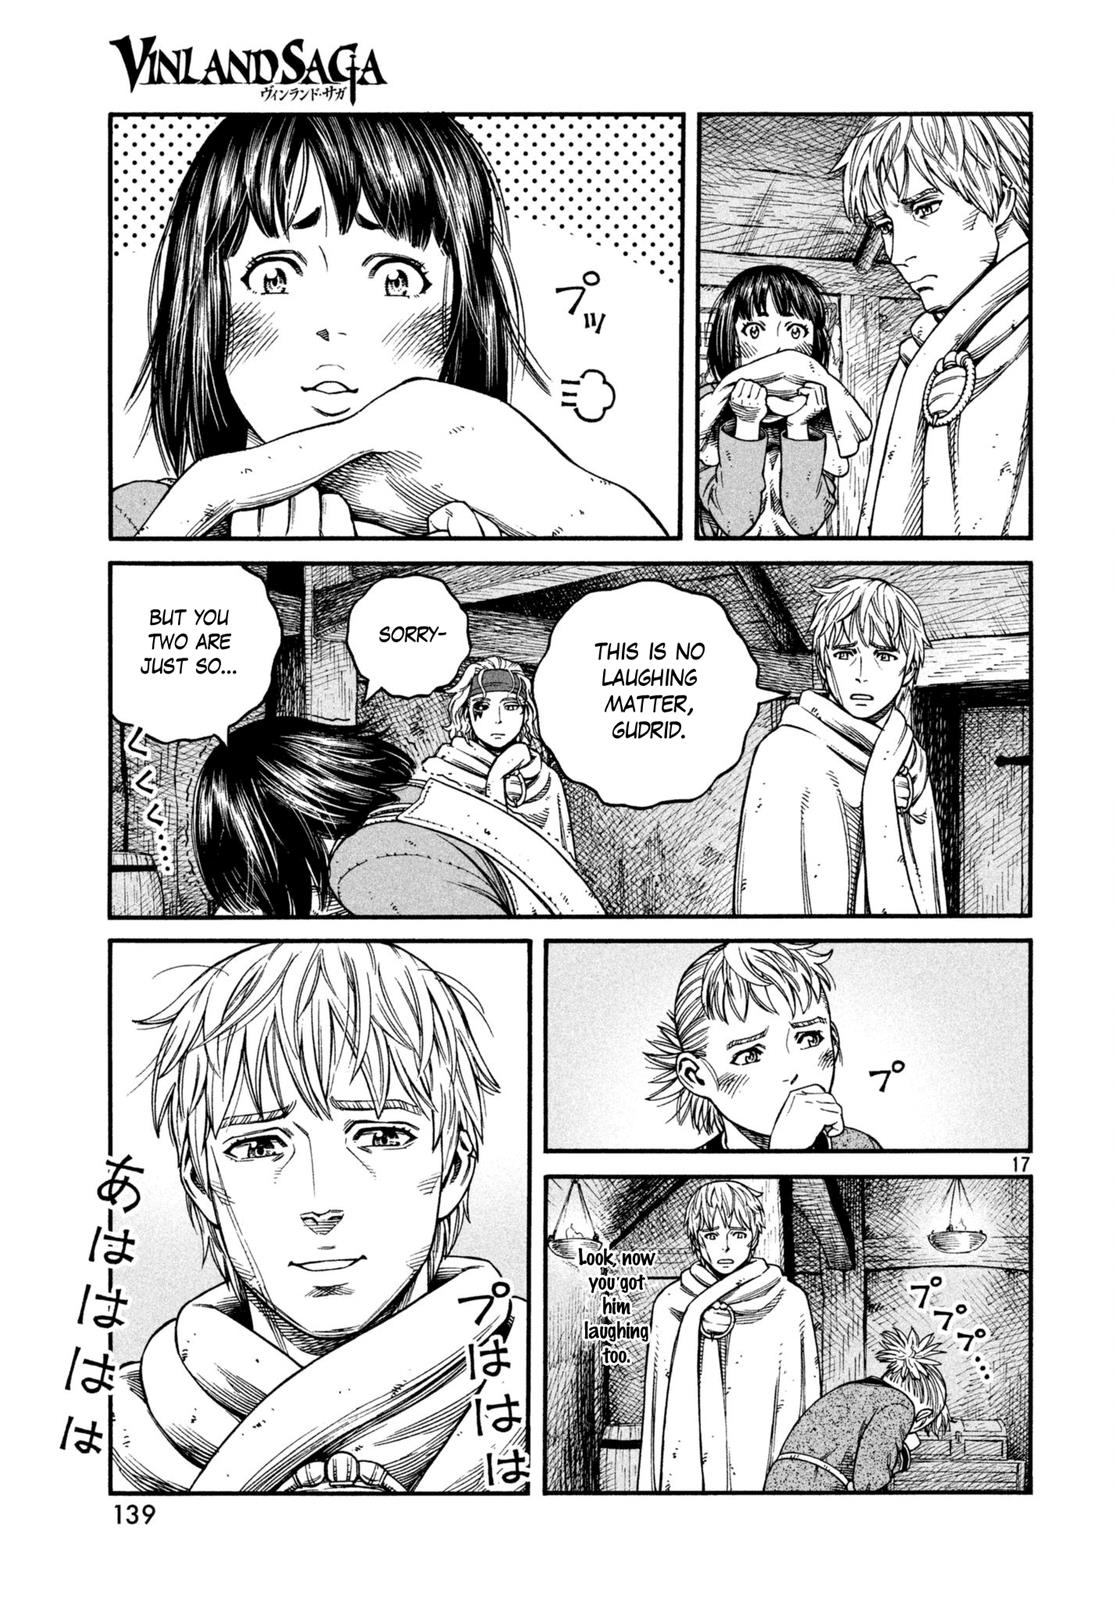 Vinland Saga Manga Manga Chapter - 148 - image 17